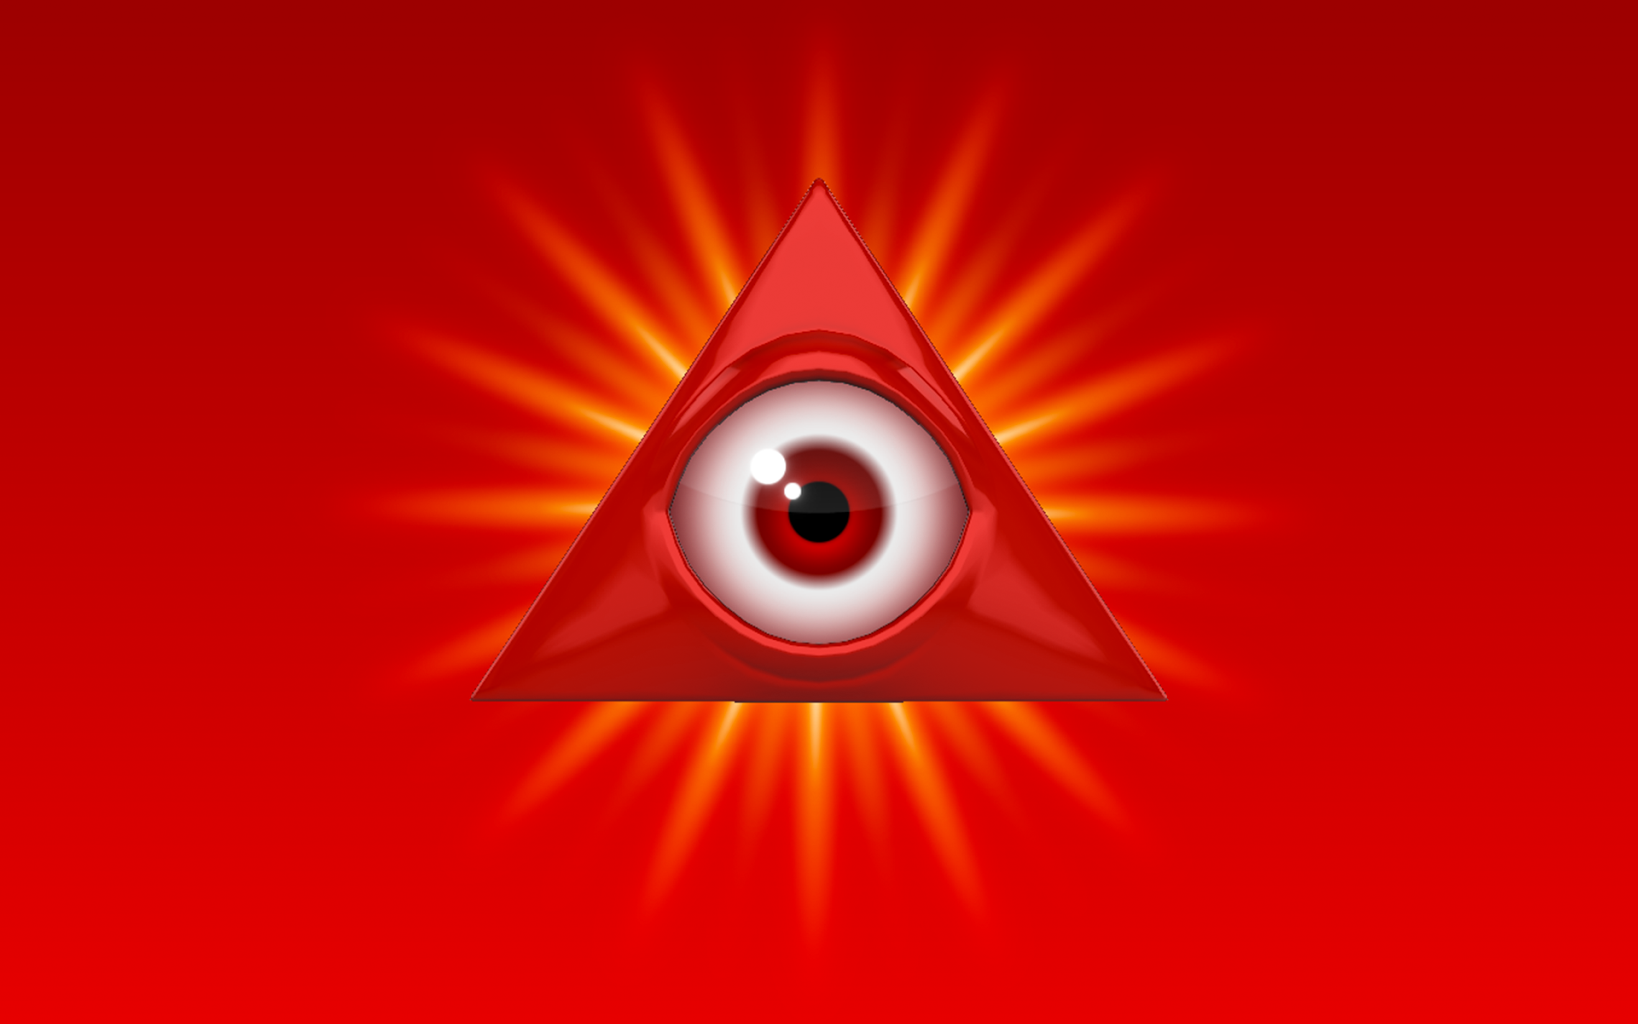 All Seeing Eye Illuminati Wallpaper Live